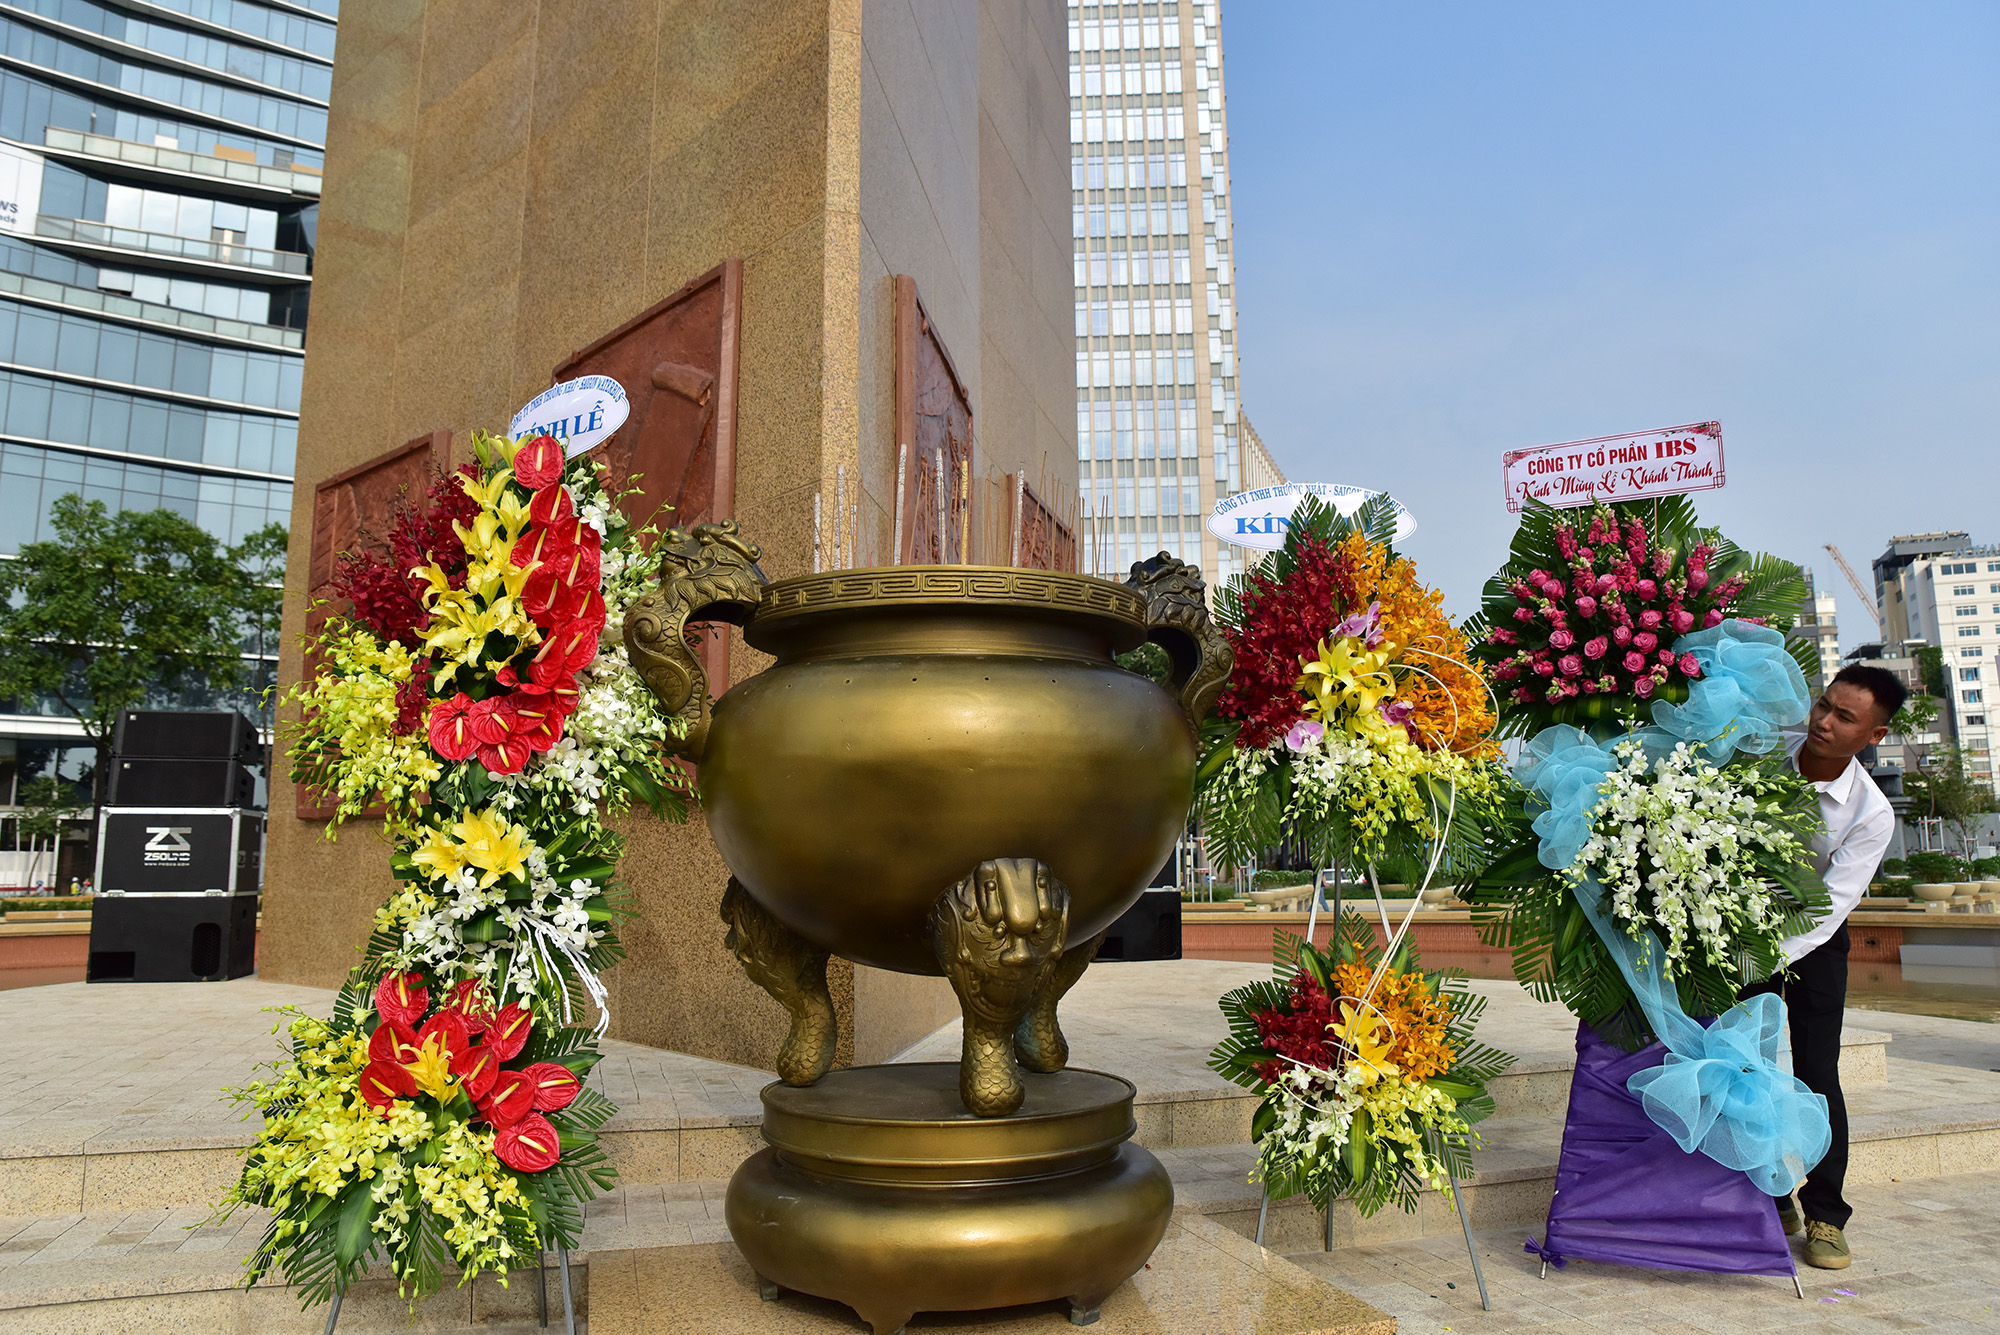 Reset the incense burner at Tran Hung Dao monument - 2